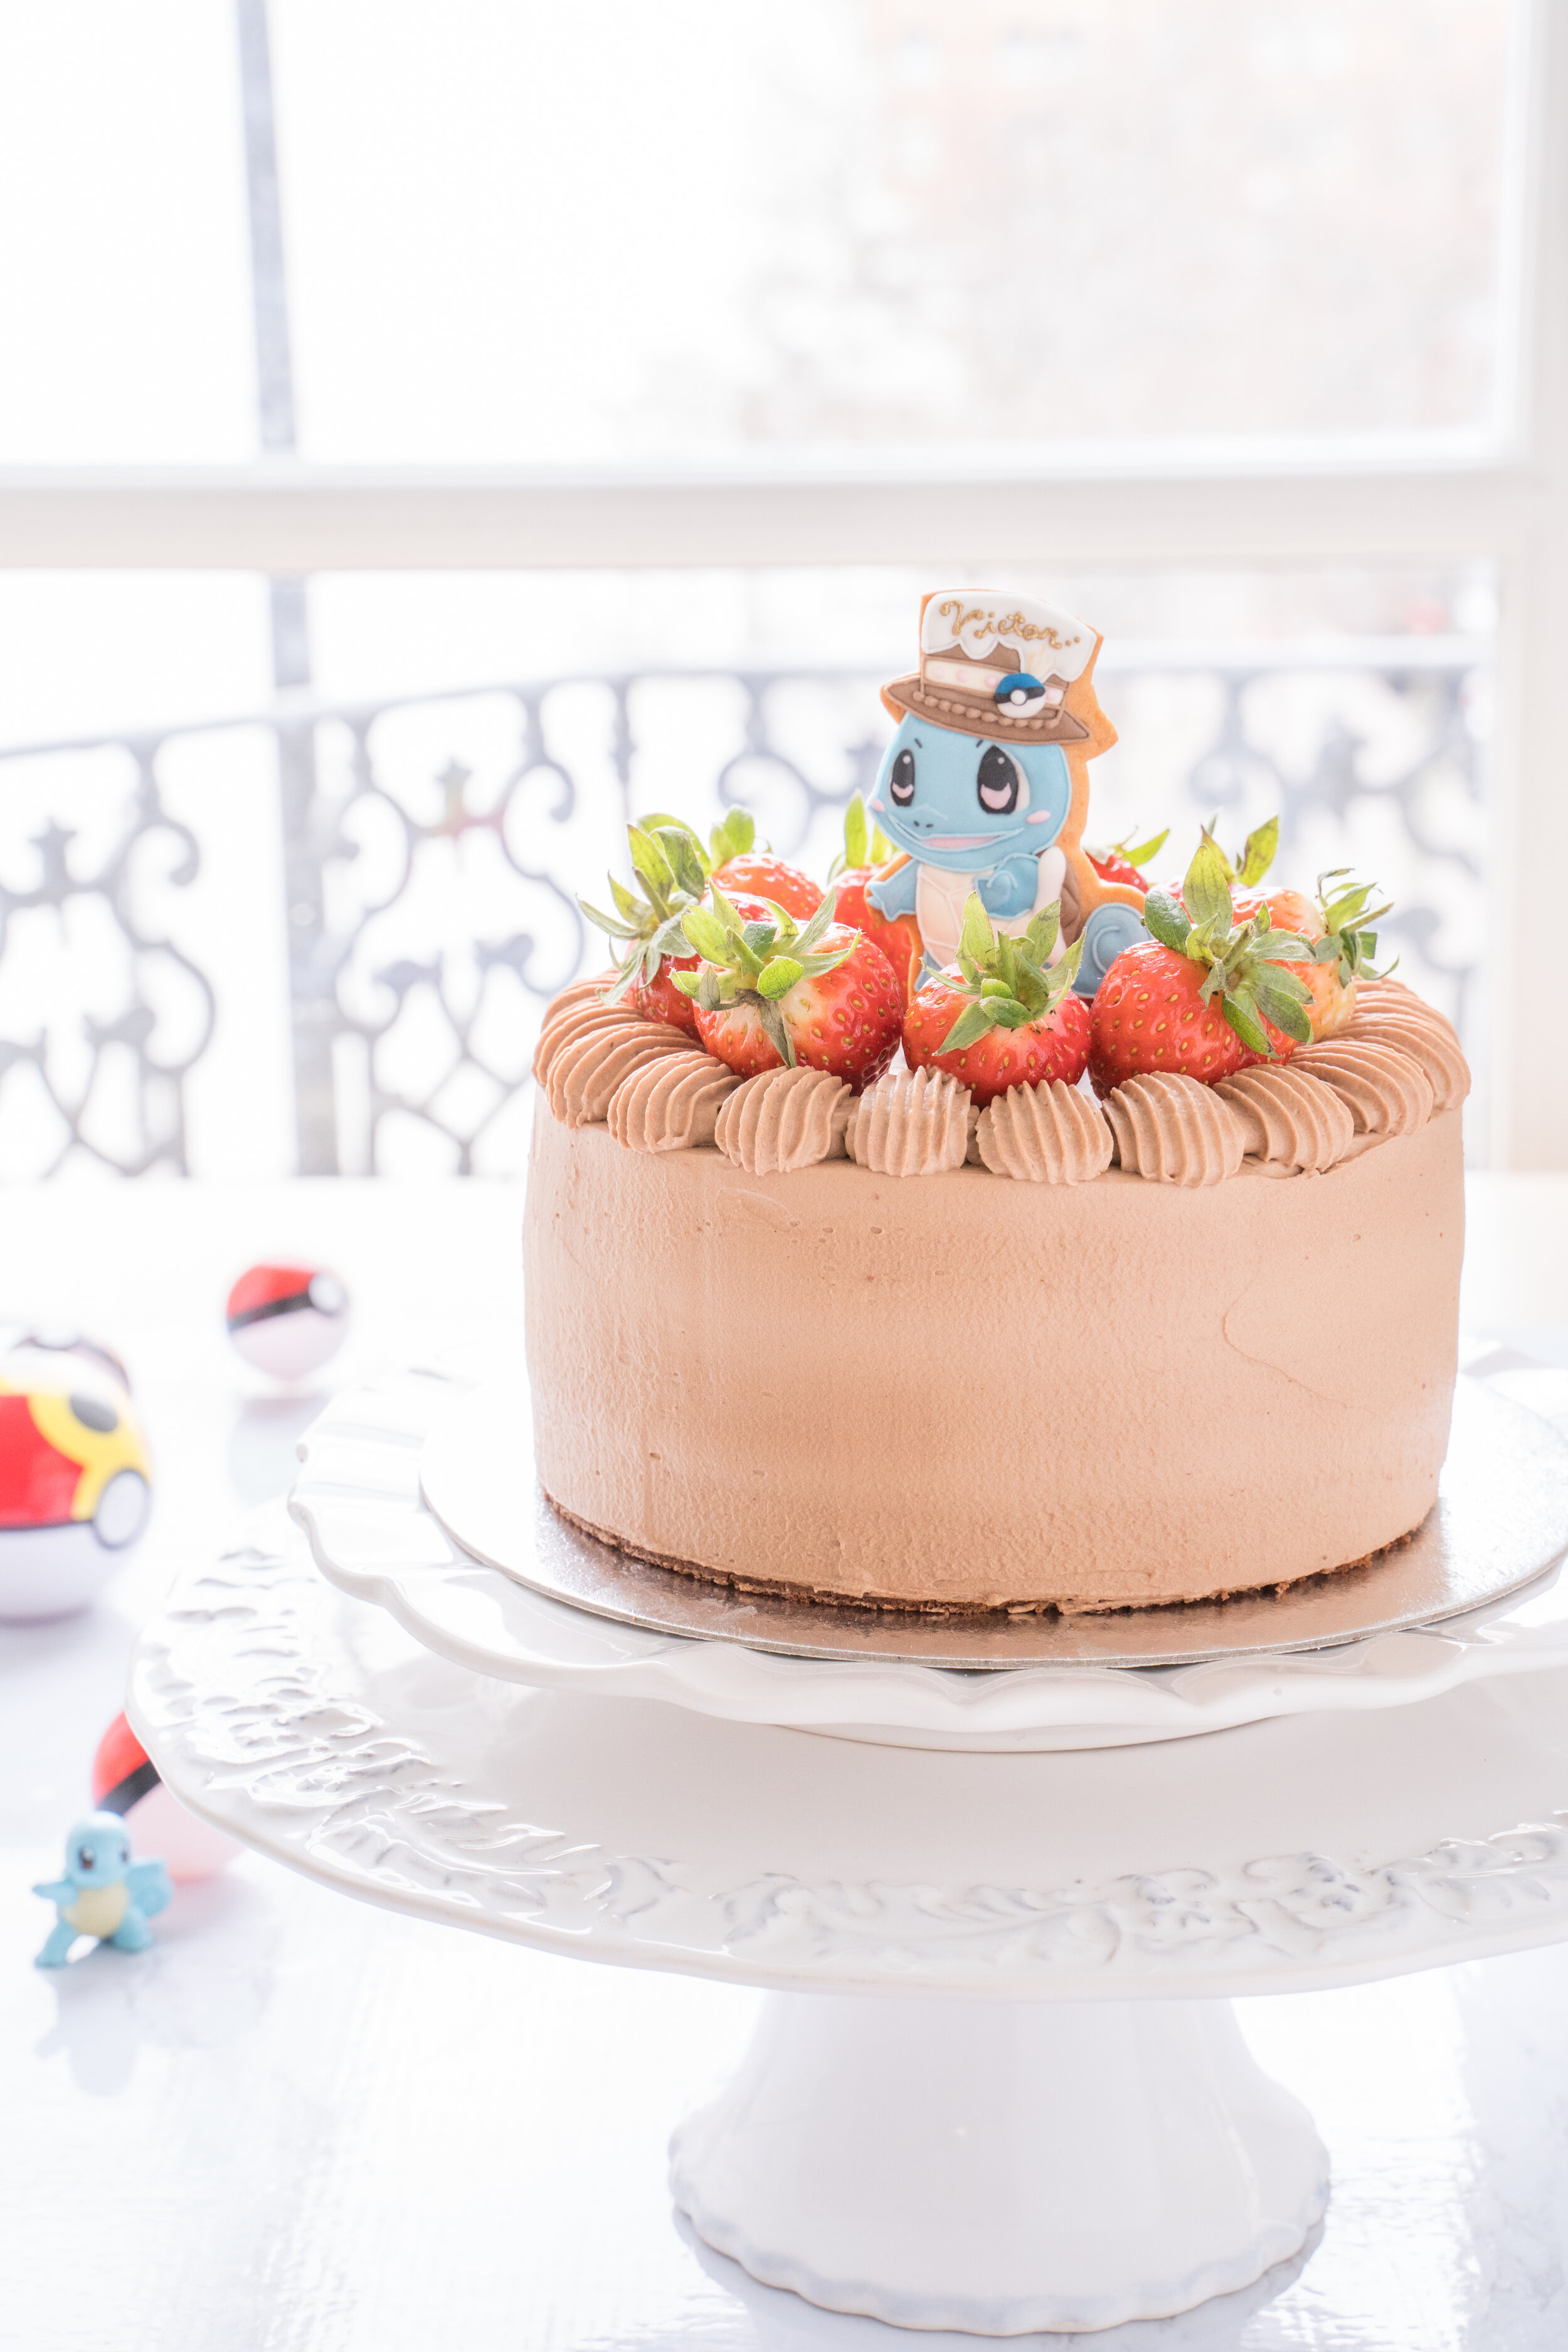 Pokemon Squirtle Chocolate Cake ゼニガメのチョコレートケーキ Coucou Natsuha